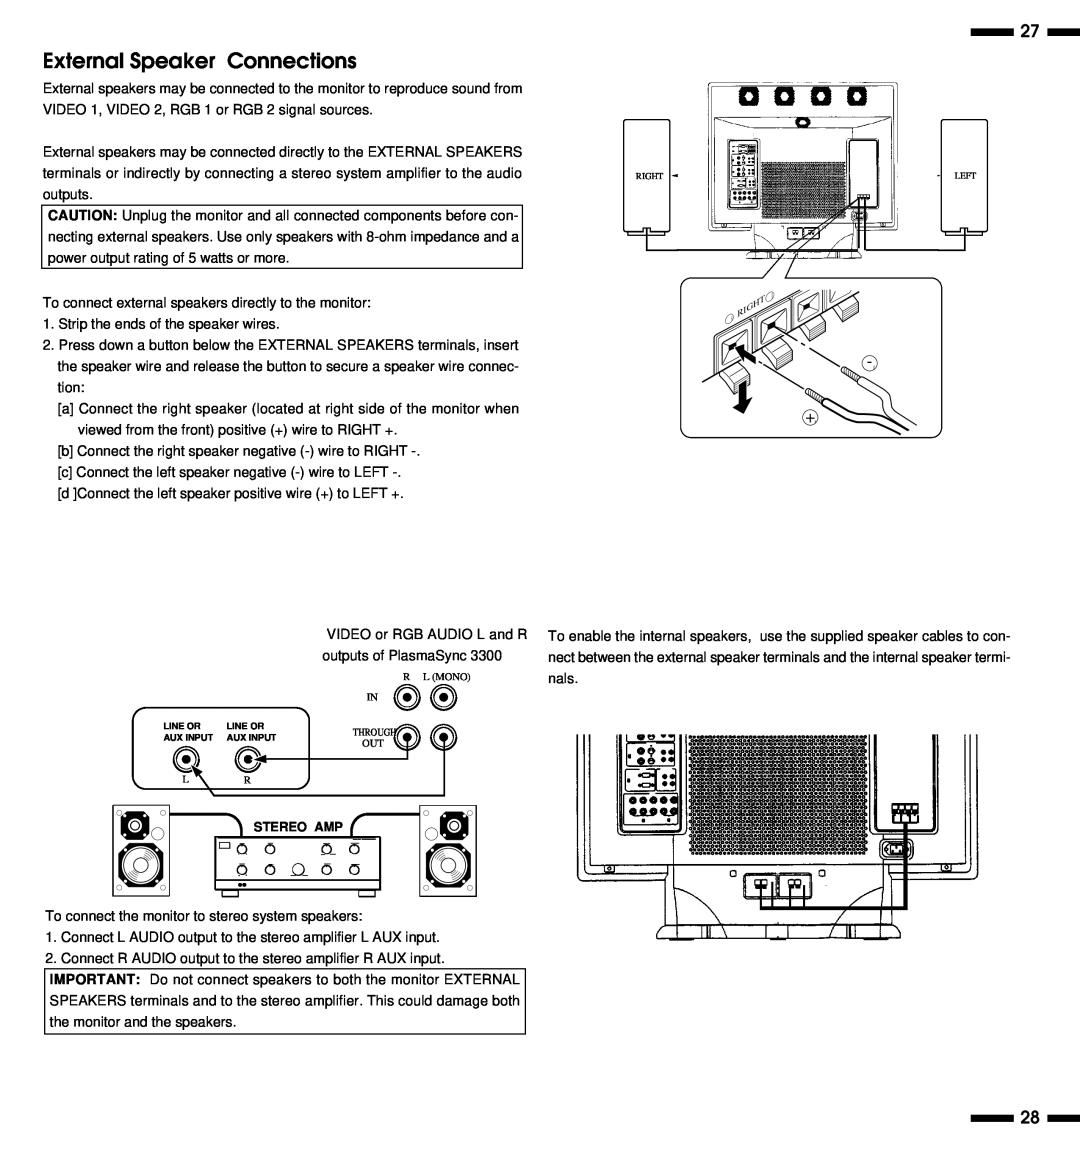 NEC PlasmaSync 3300 user manual External Speaker Connections 